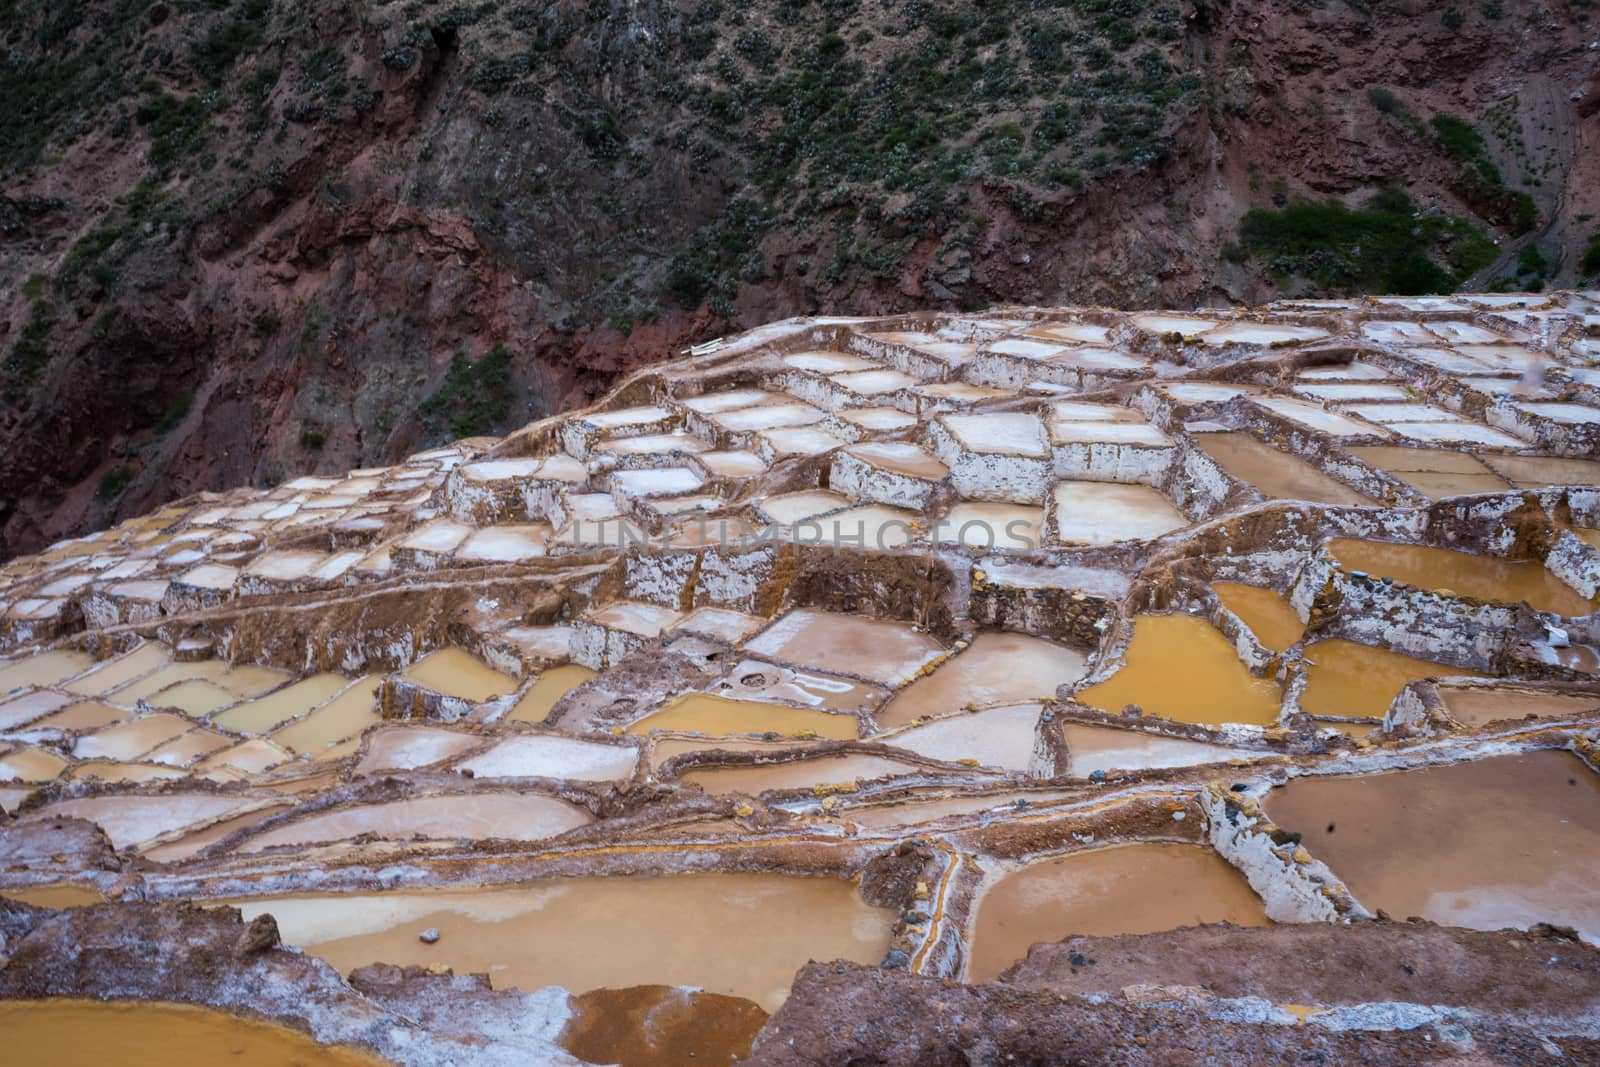 Salt mines, Peru by roglopes